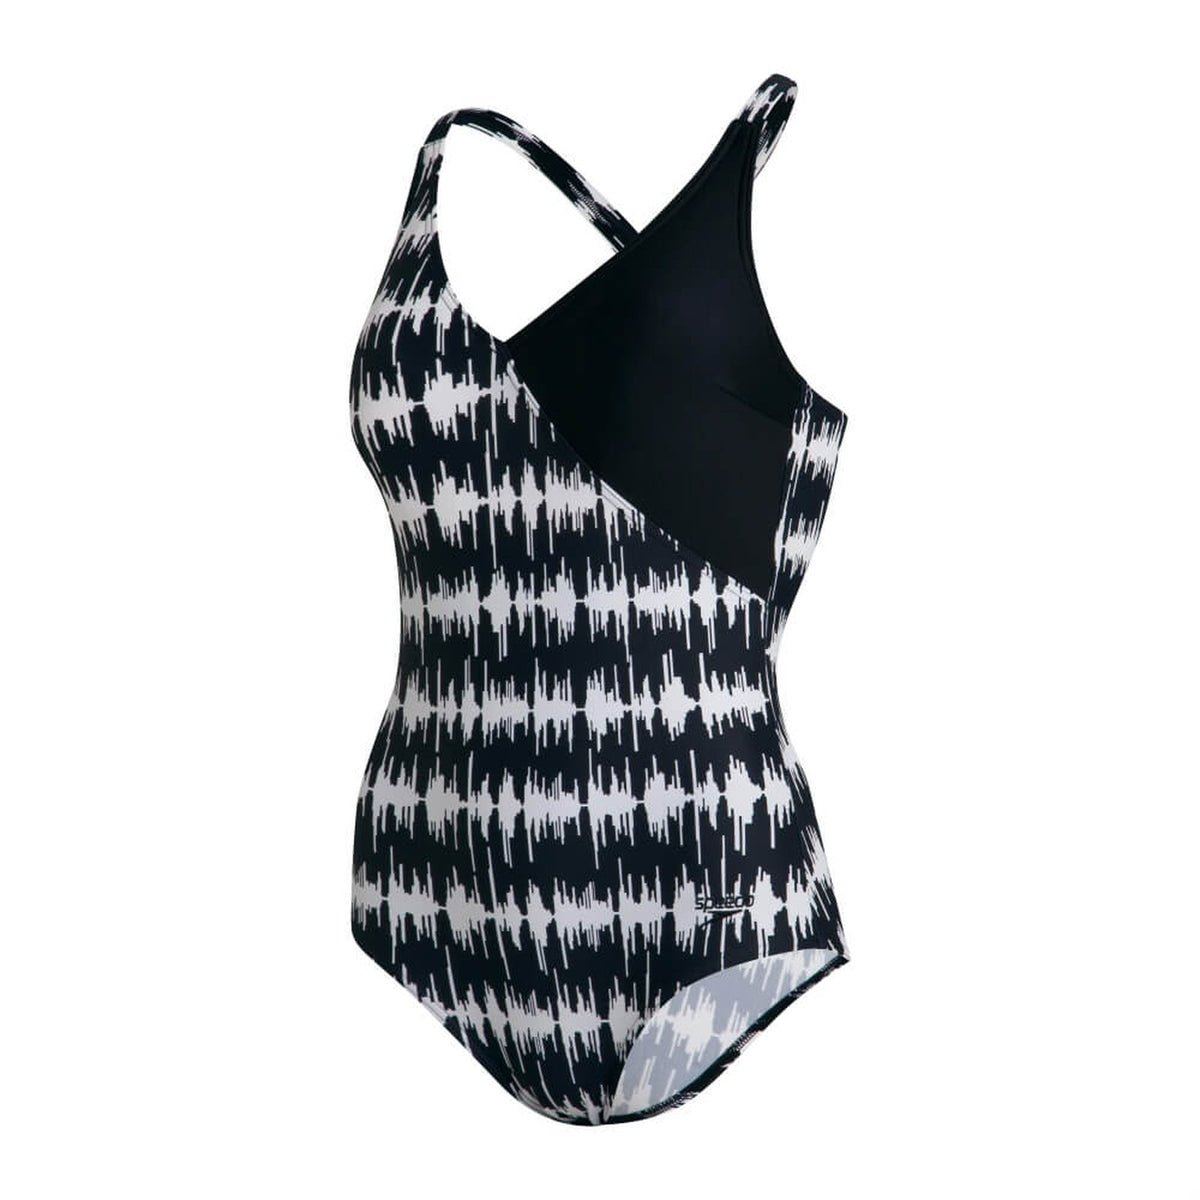 Speedo Women's Lexi Printed Shaping 1PC Swimsuit - Black/White